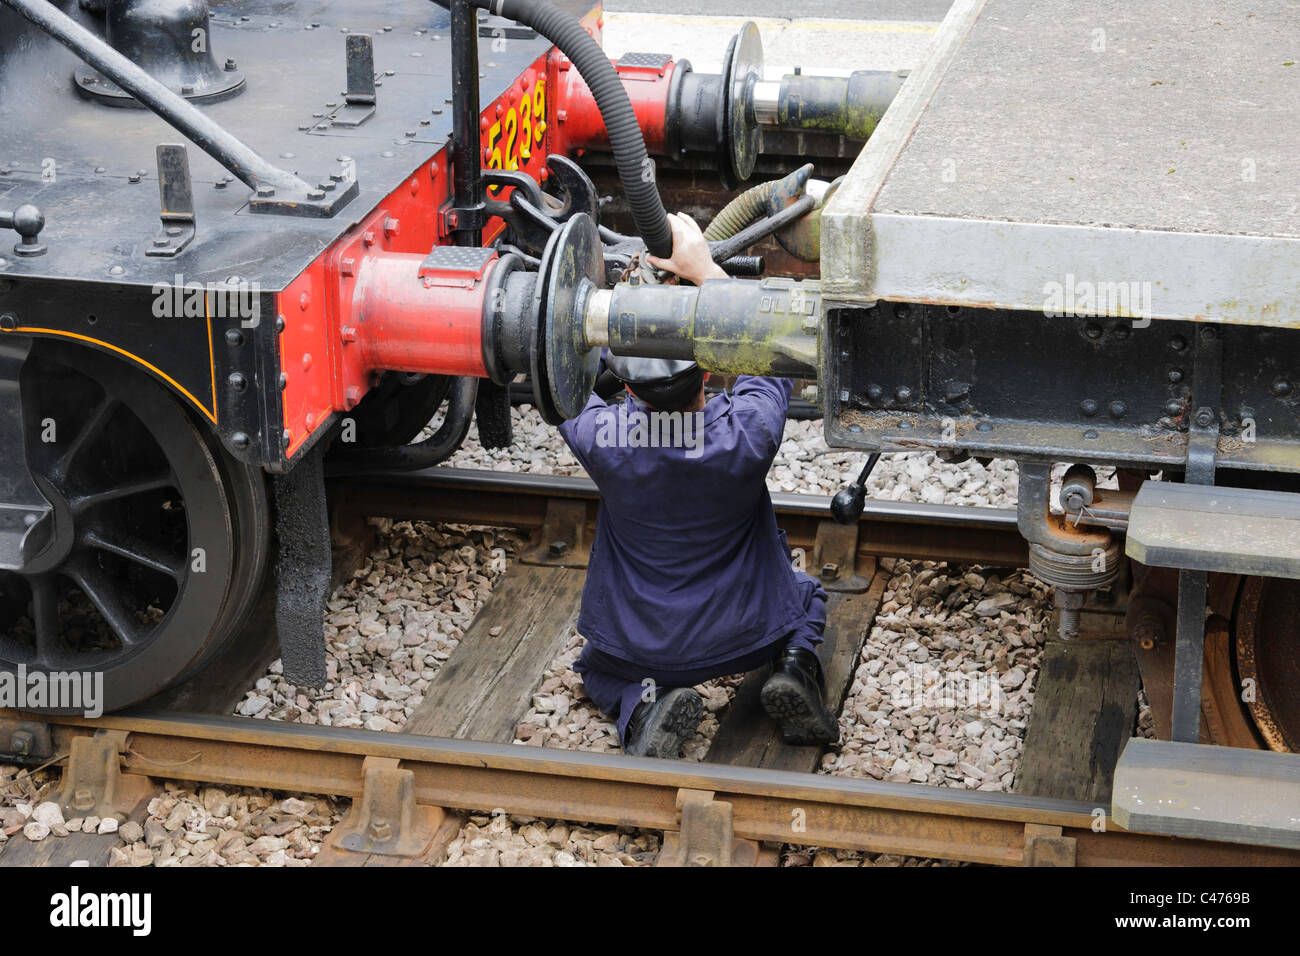 Rail worker coupling steam locomotive to train Stock Photo